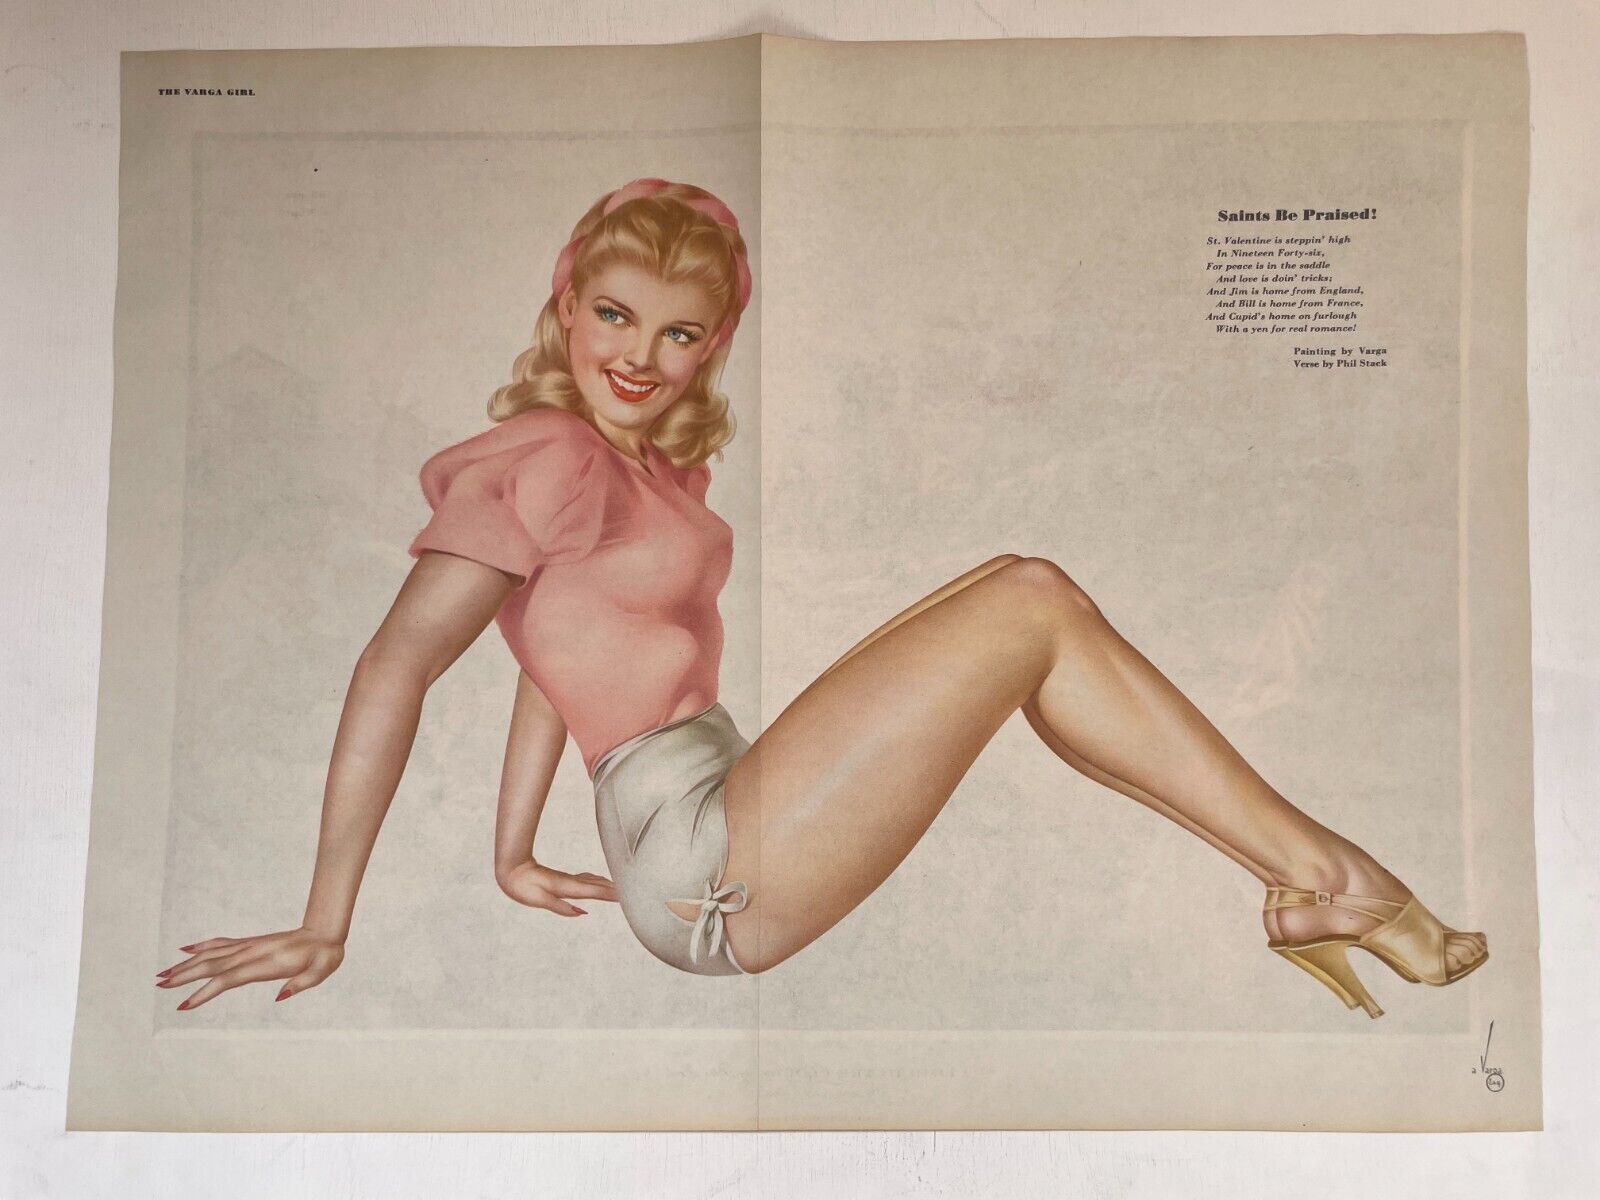 1946 Pinup Girl Centerfold by Varga- Esquire Magazine- Saints Be Praised